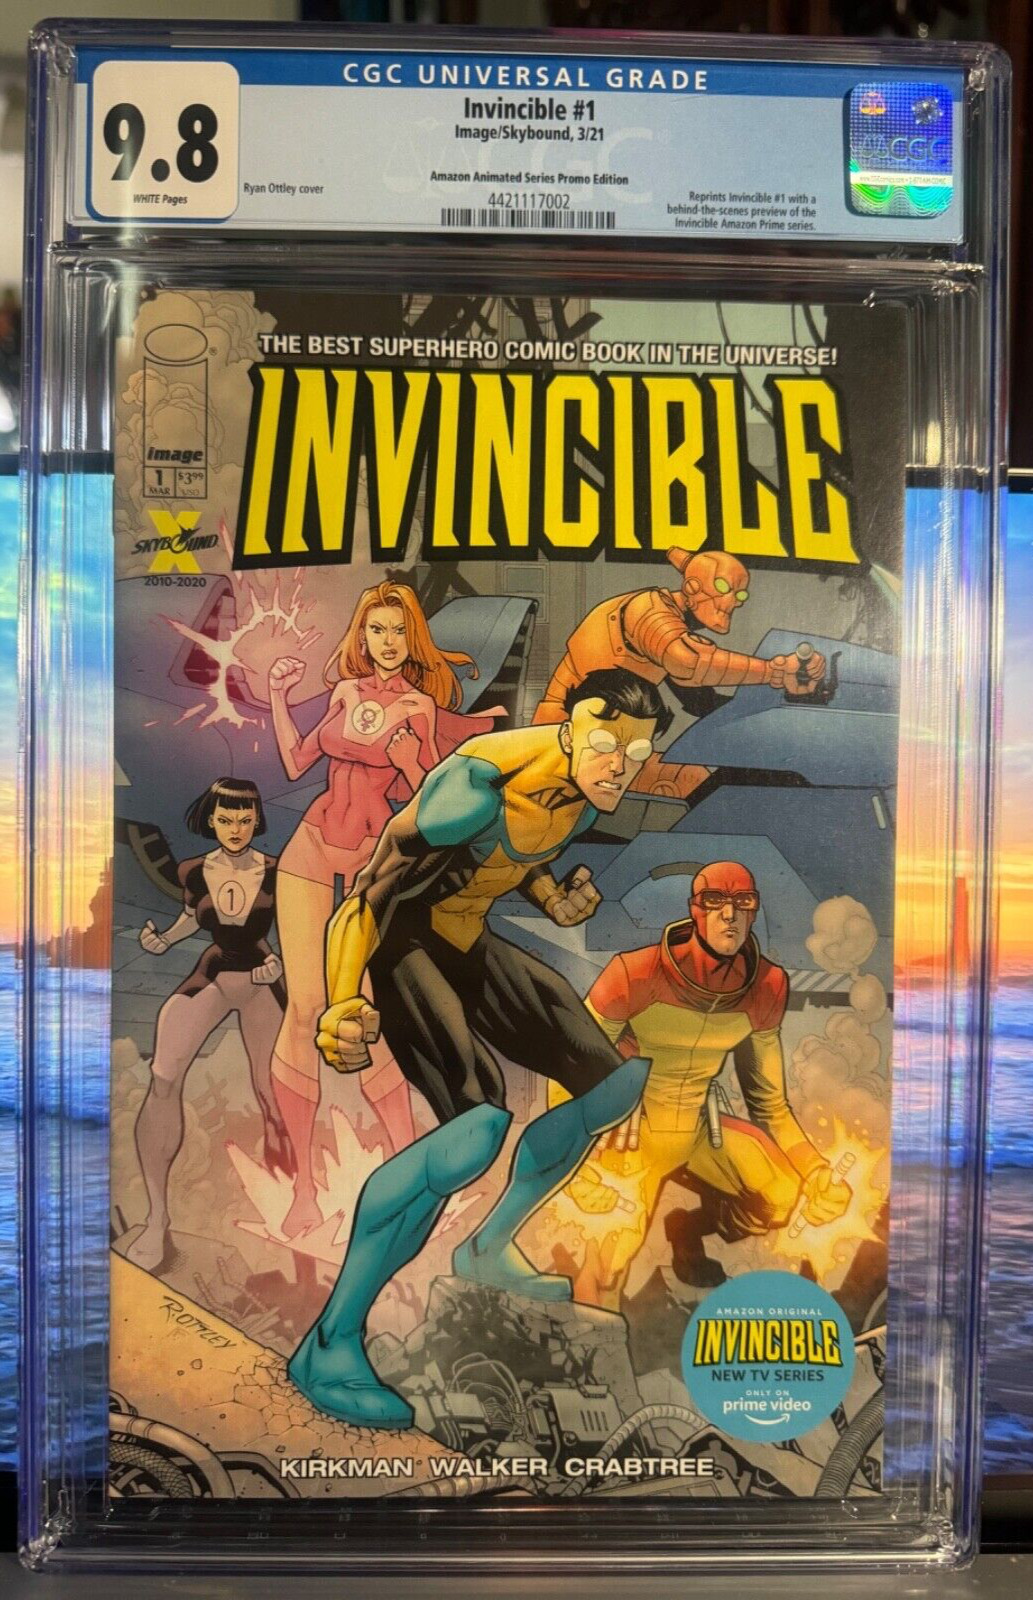 Invincible #1 - Amazon Animated Series Promo Edition (Image, 2021) - CGC 9.8